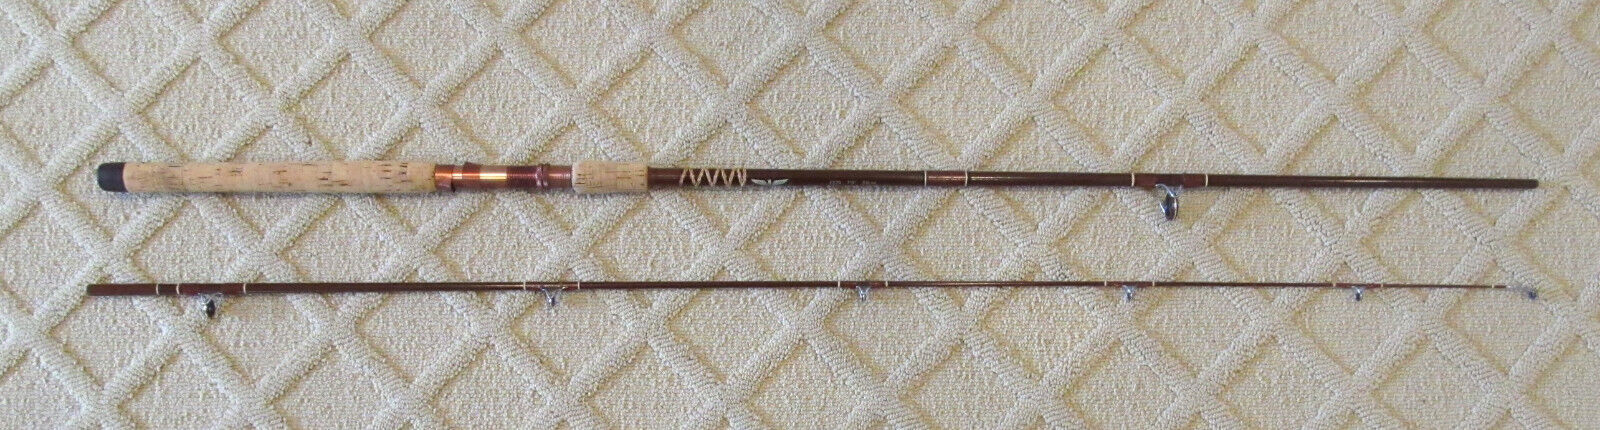 Classic Fenwick FS79, 7’9”, 2 Pc Salmon/Steelhead Fishing Rod - SN N277569 - VGC